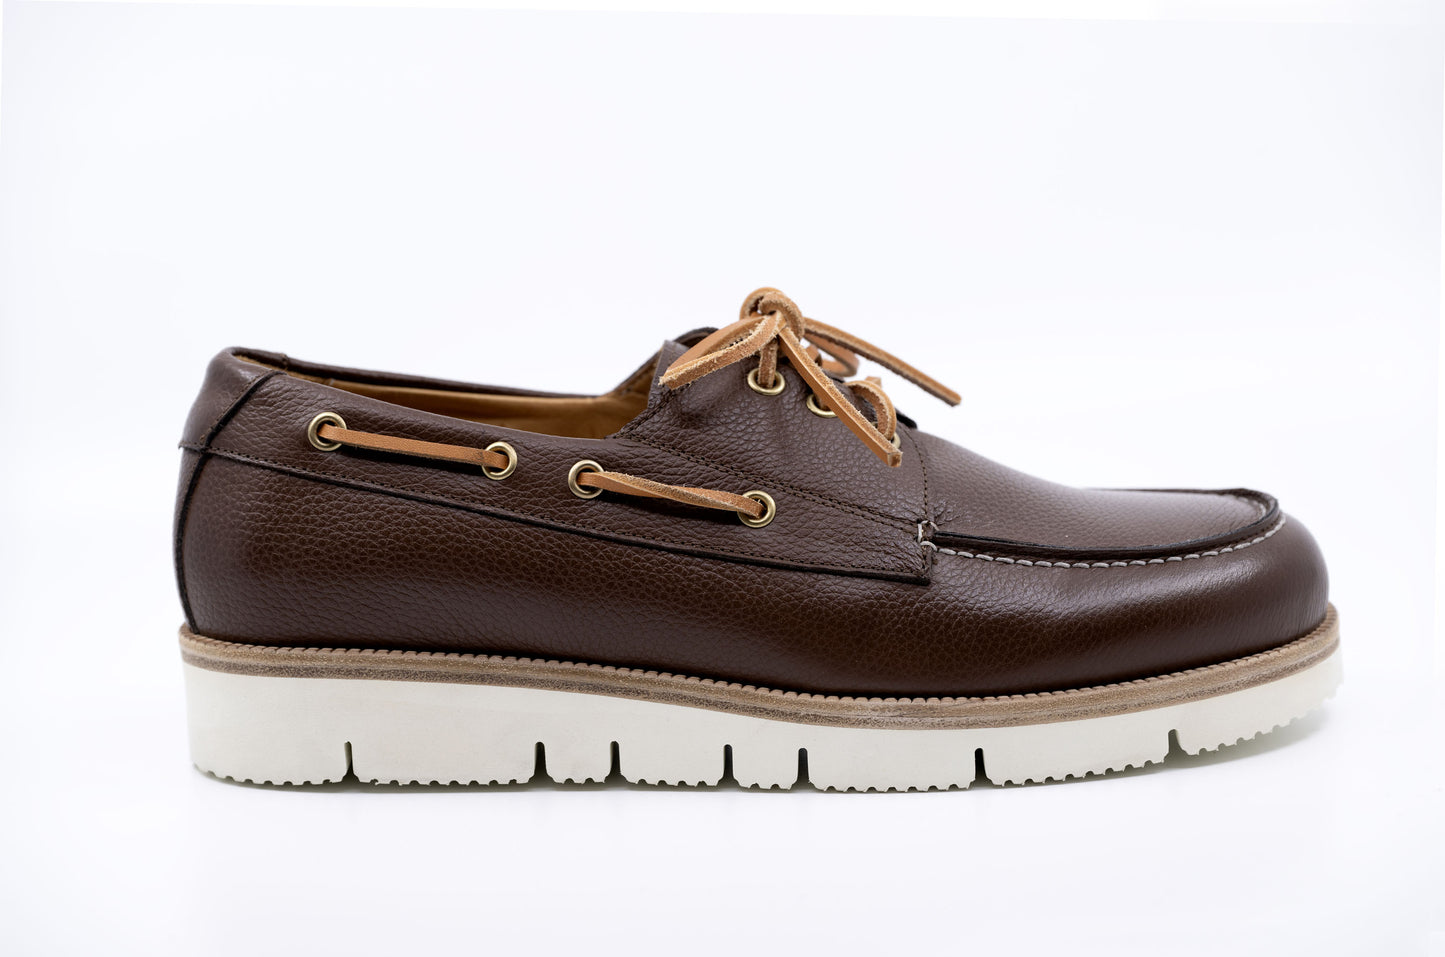 Hopkins Men's Boat Shoes - Brown